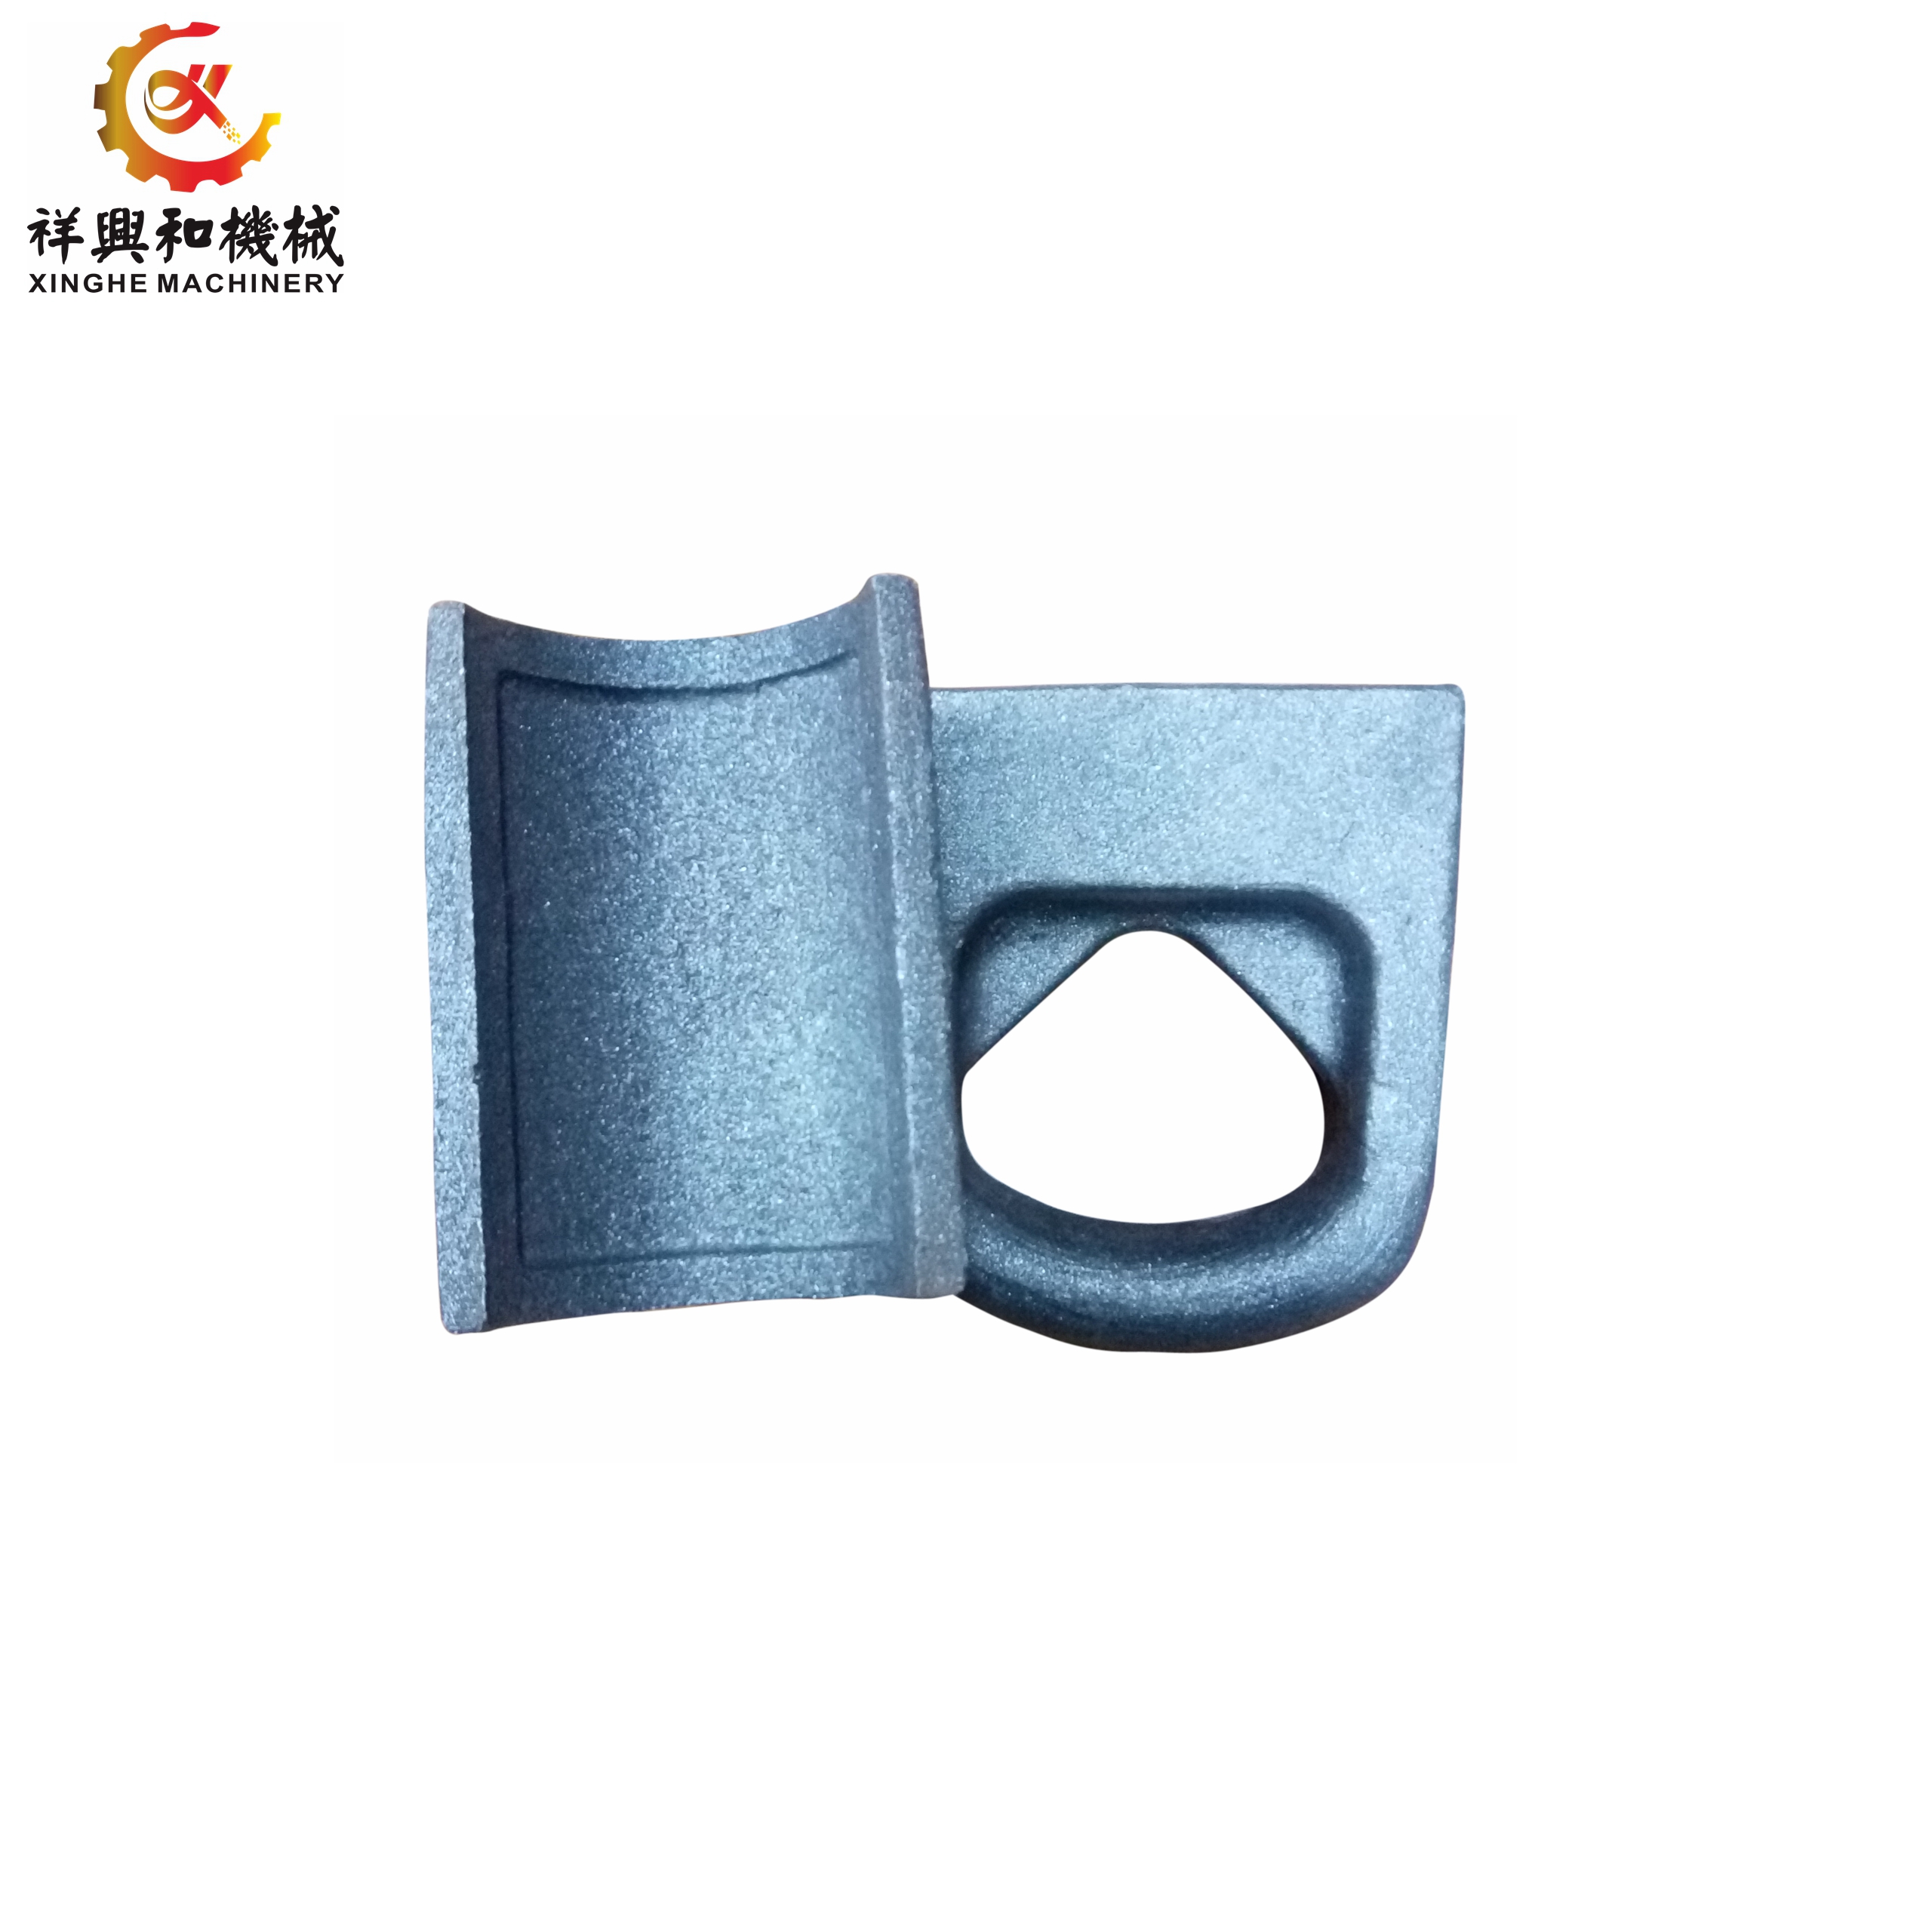 China foundry custom grey cast iron parts manufacturers automotive